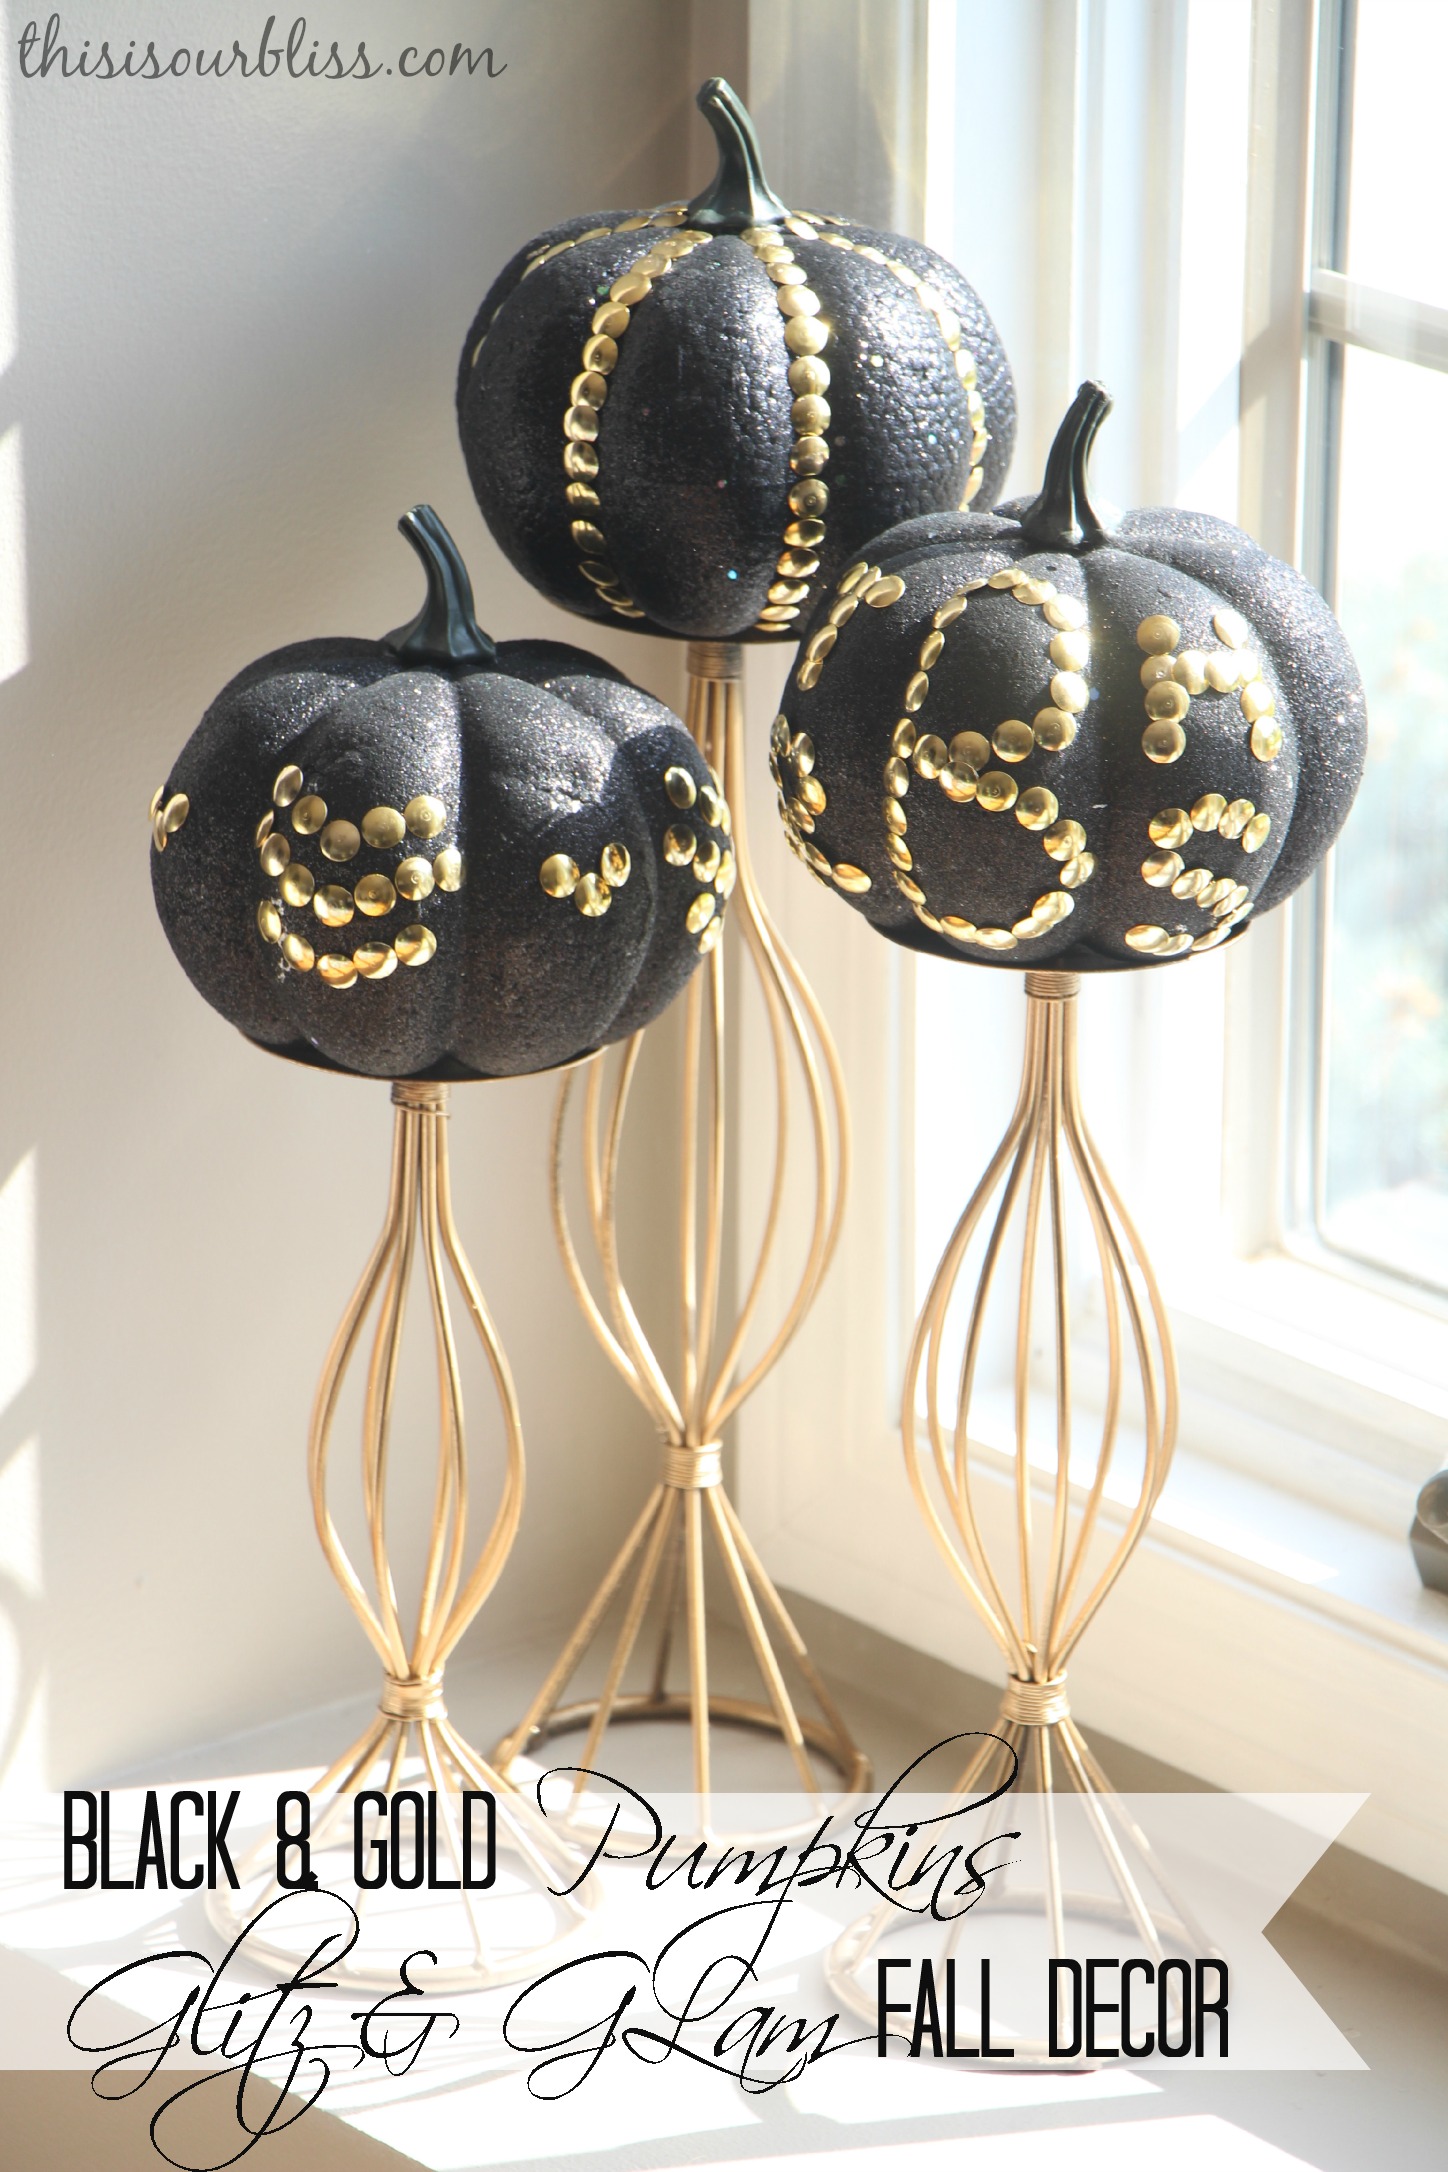 DIY Black & Gold pumpkins w Dollar Store thumb tacks glitz & glam fall decor